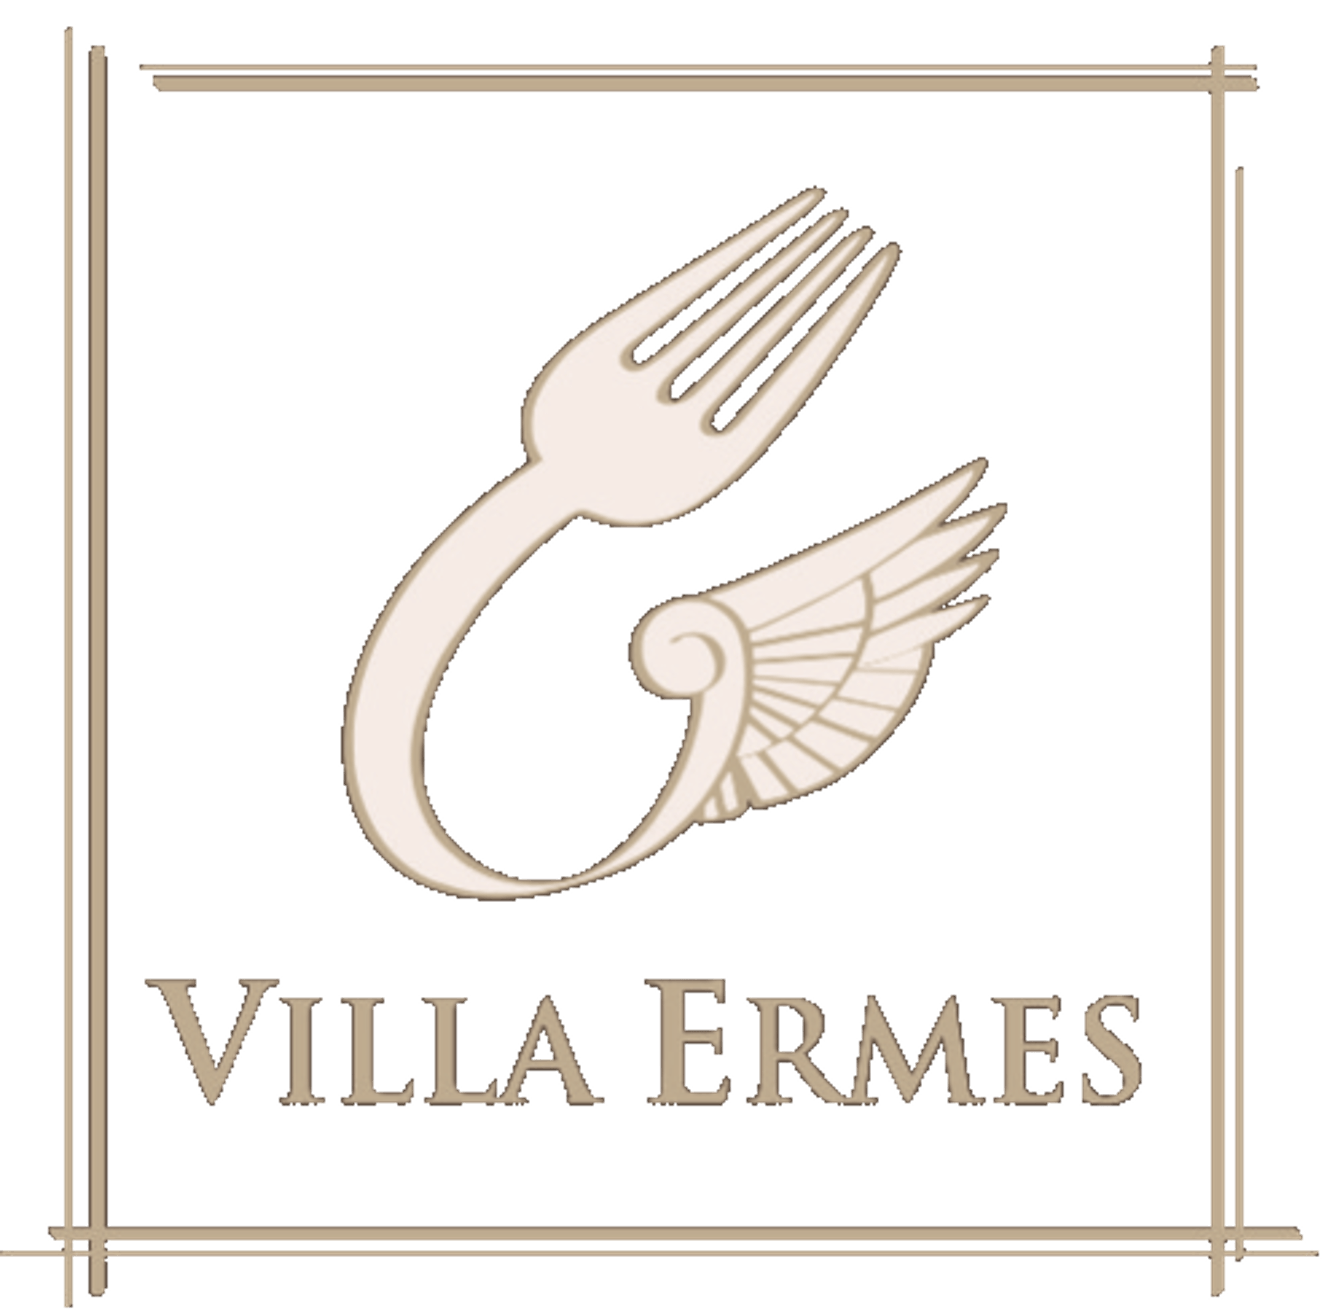 VILLA ERMES logo